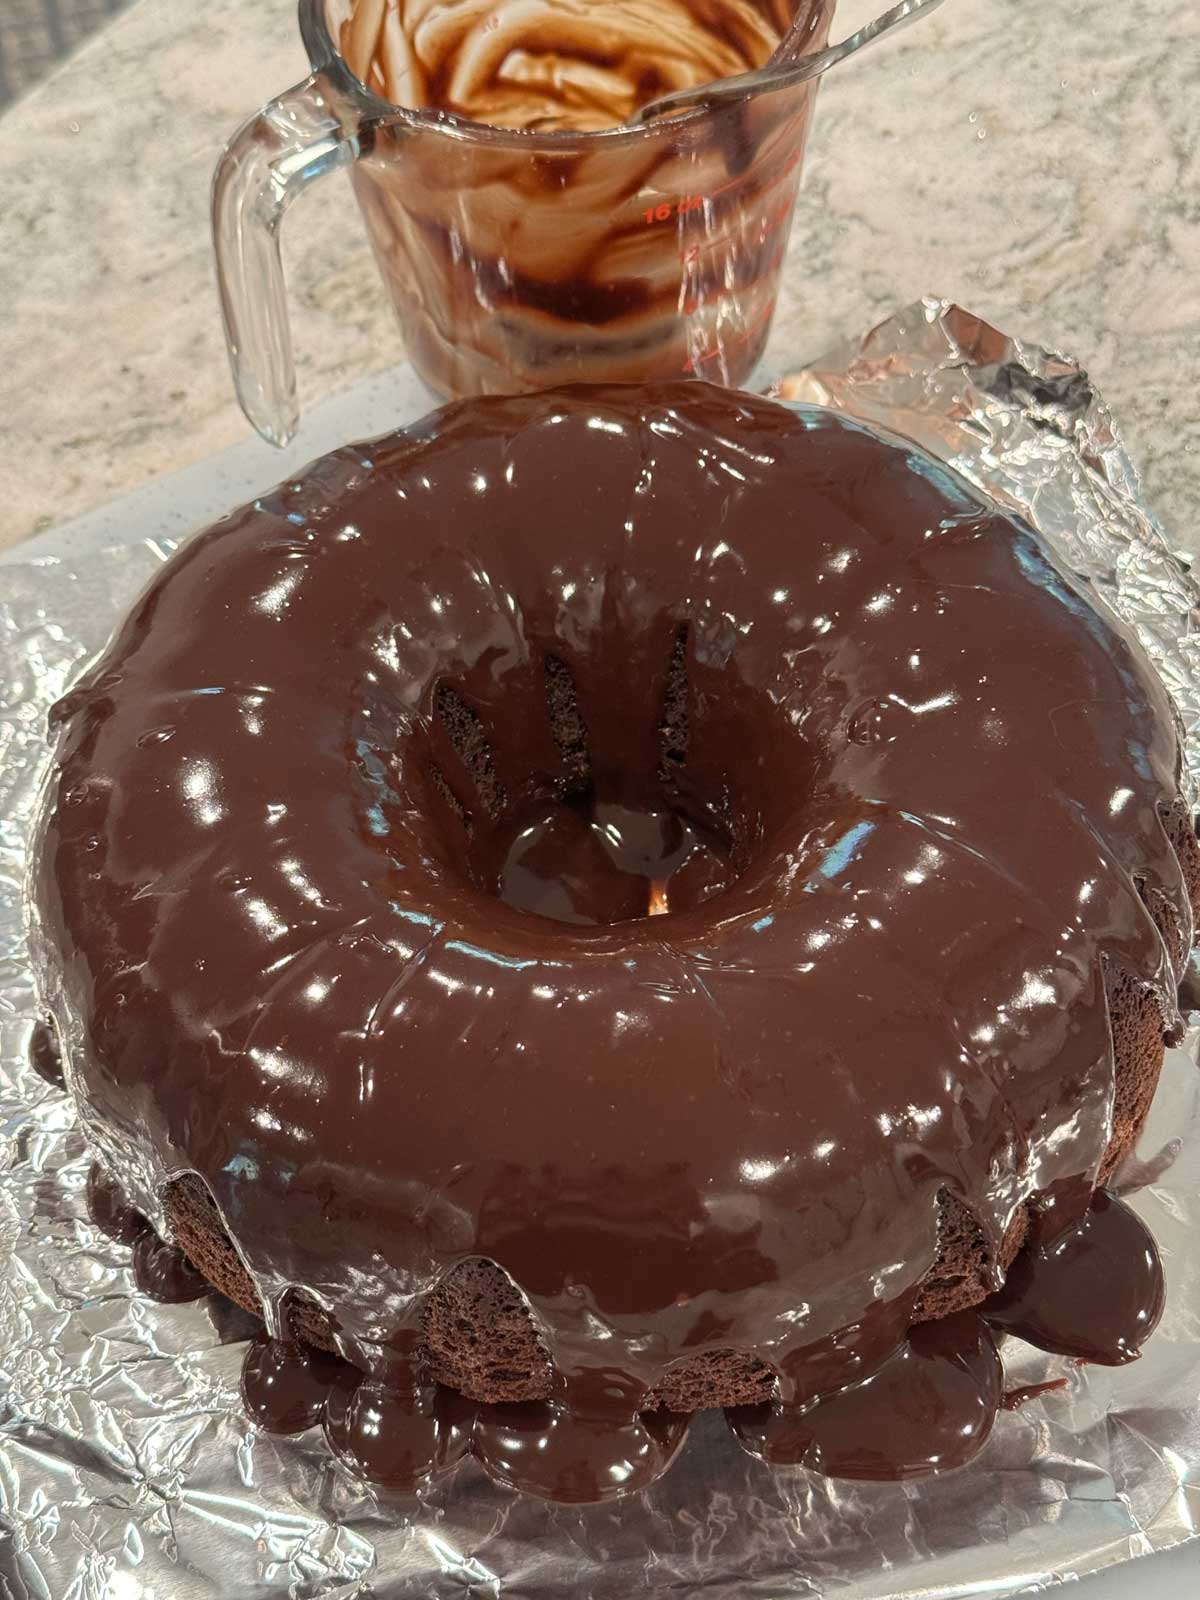 Chocolate ganache on a chocolate cheesecake Bundt cake.